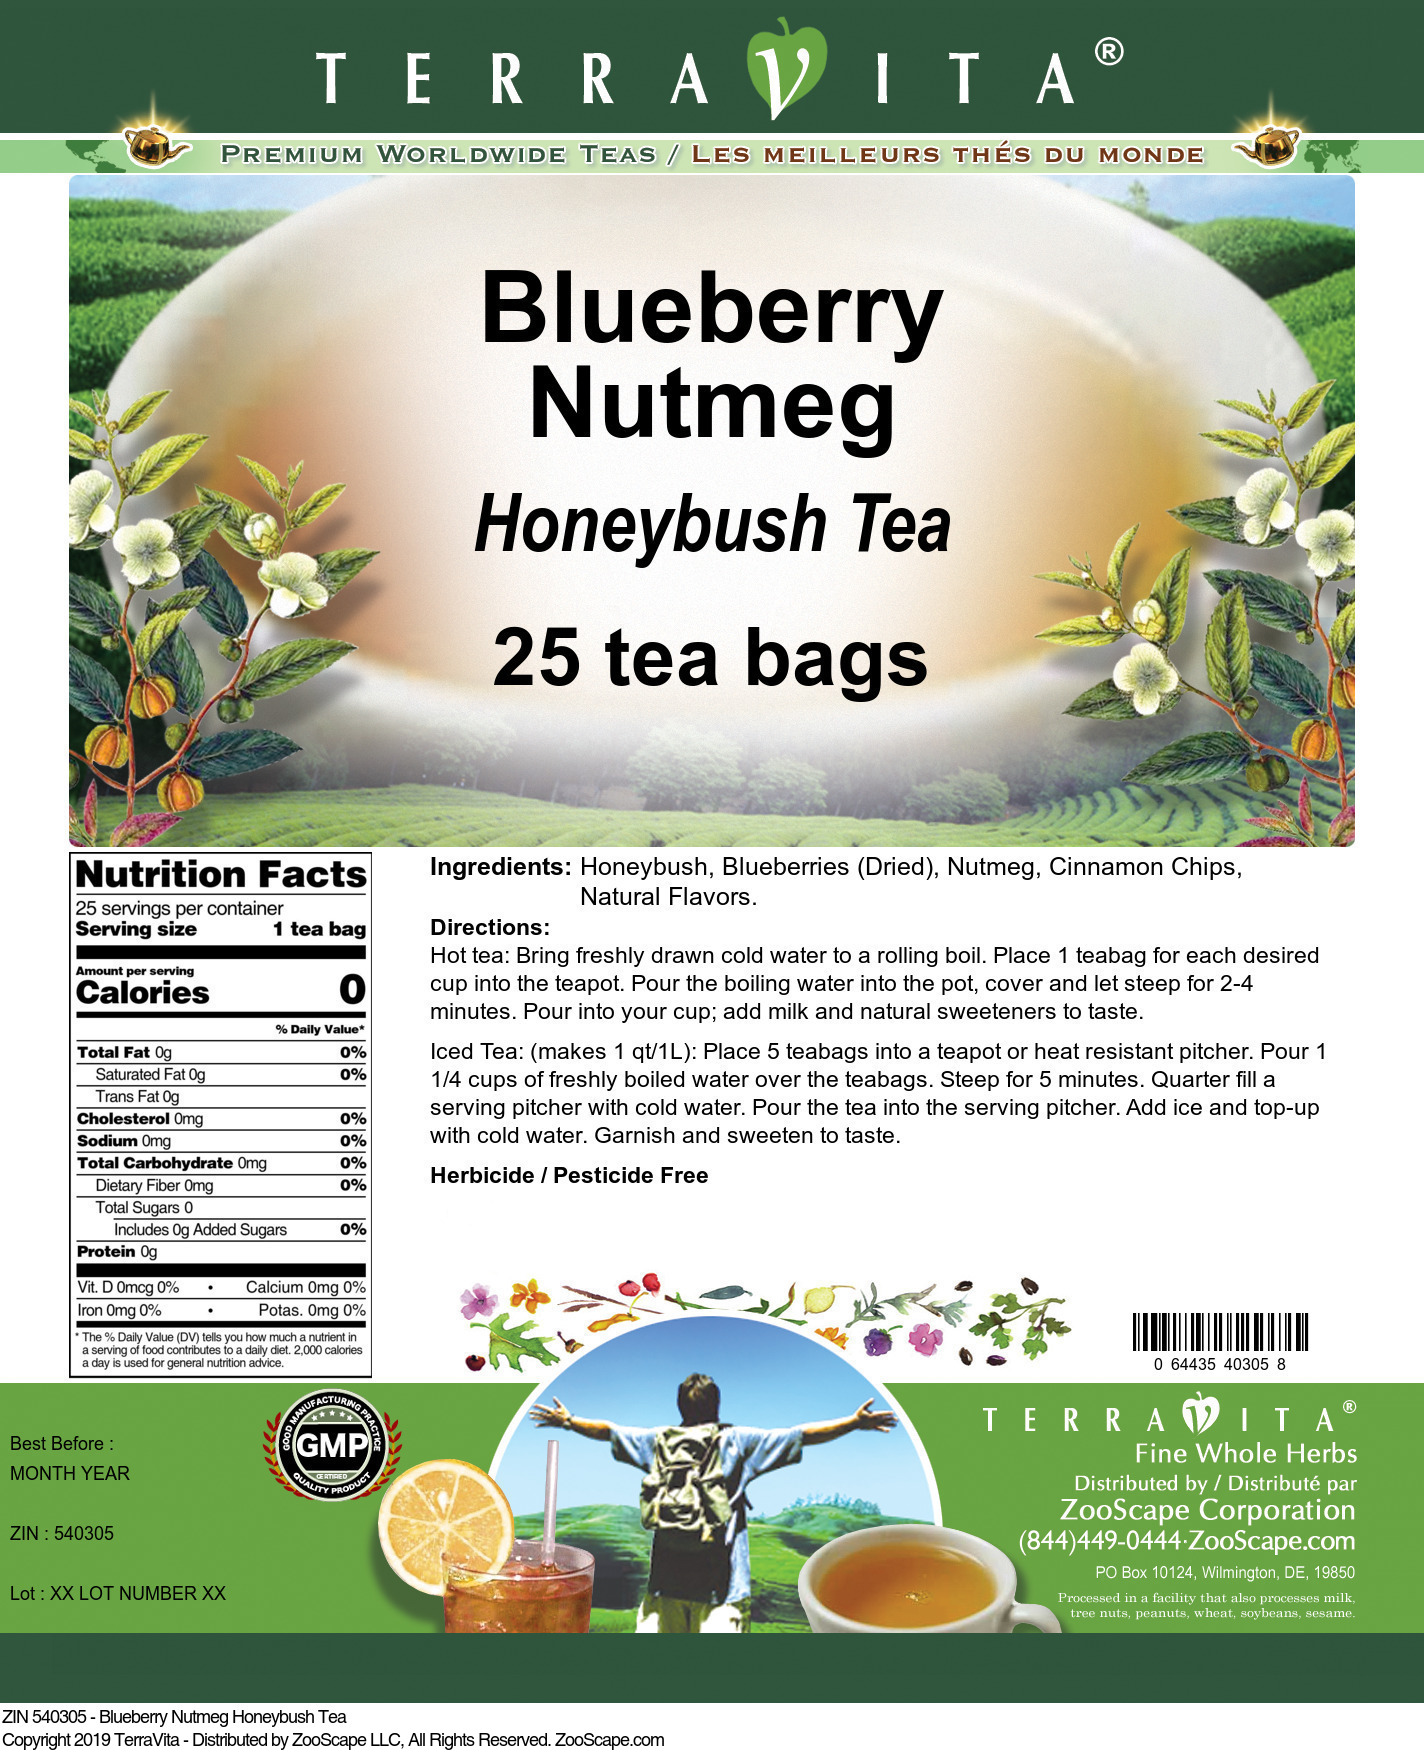 Blueberry Nutmeg Honeybush Tea - Label